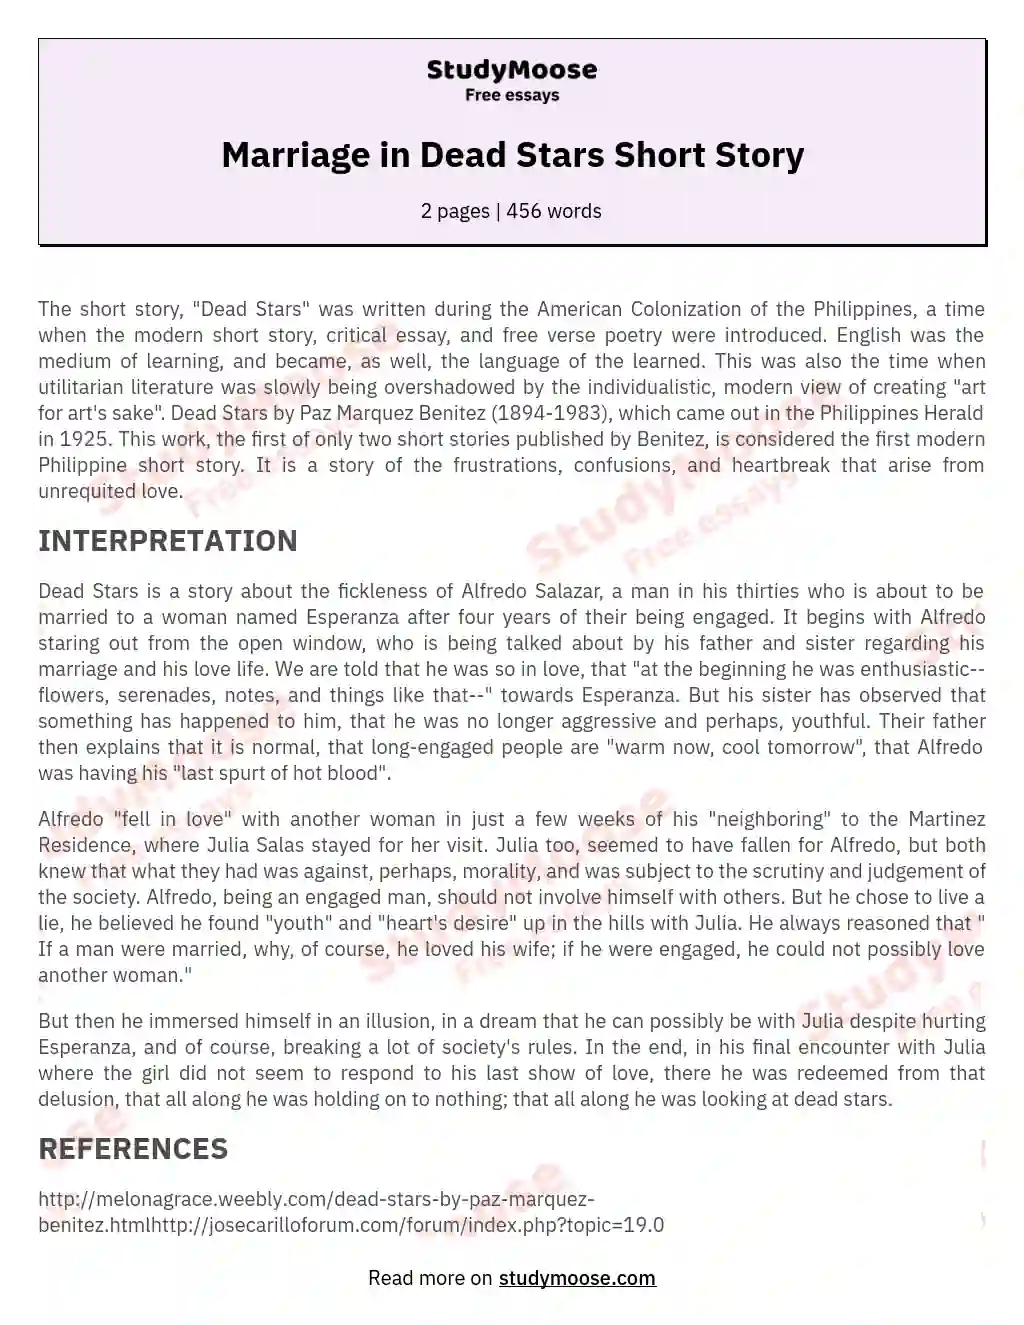 Marriage in Dead Stars Short Story essay